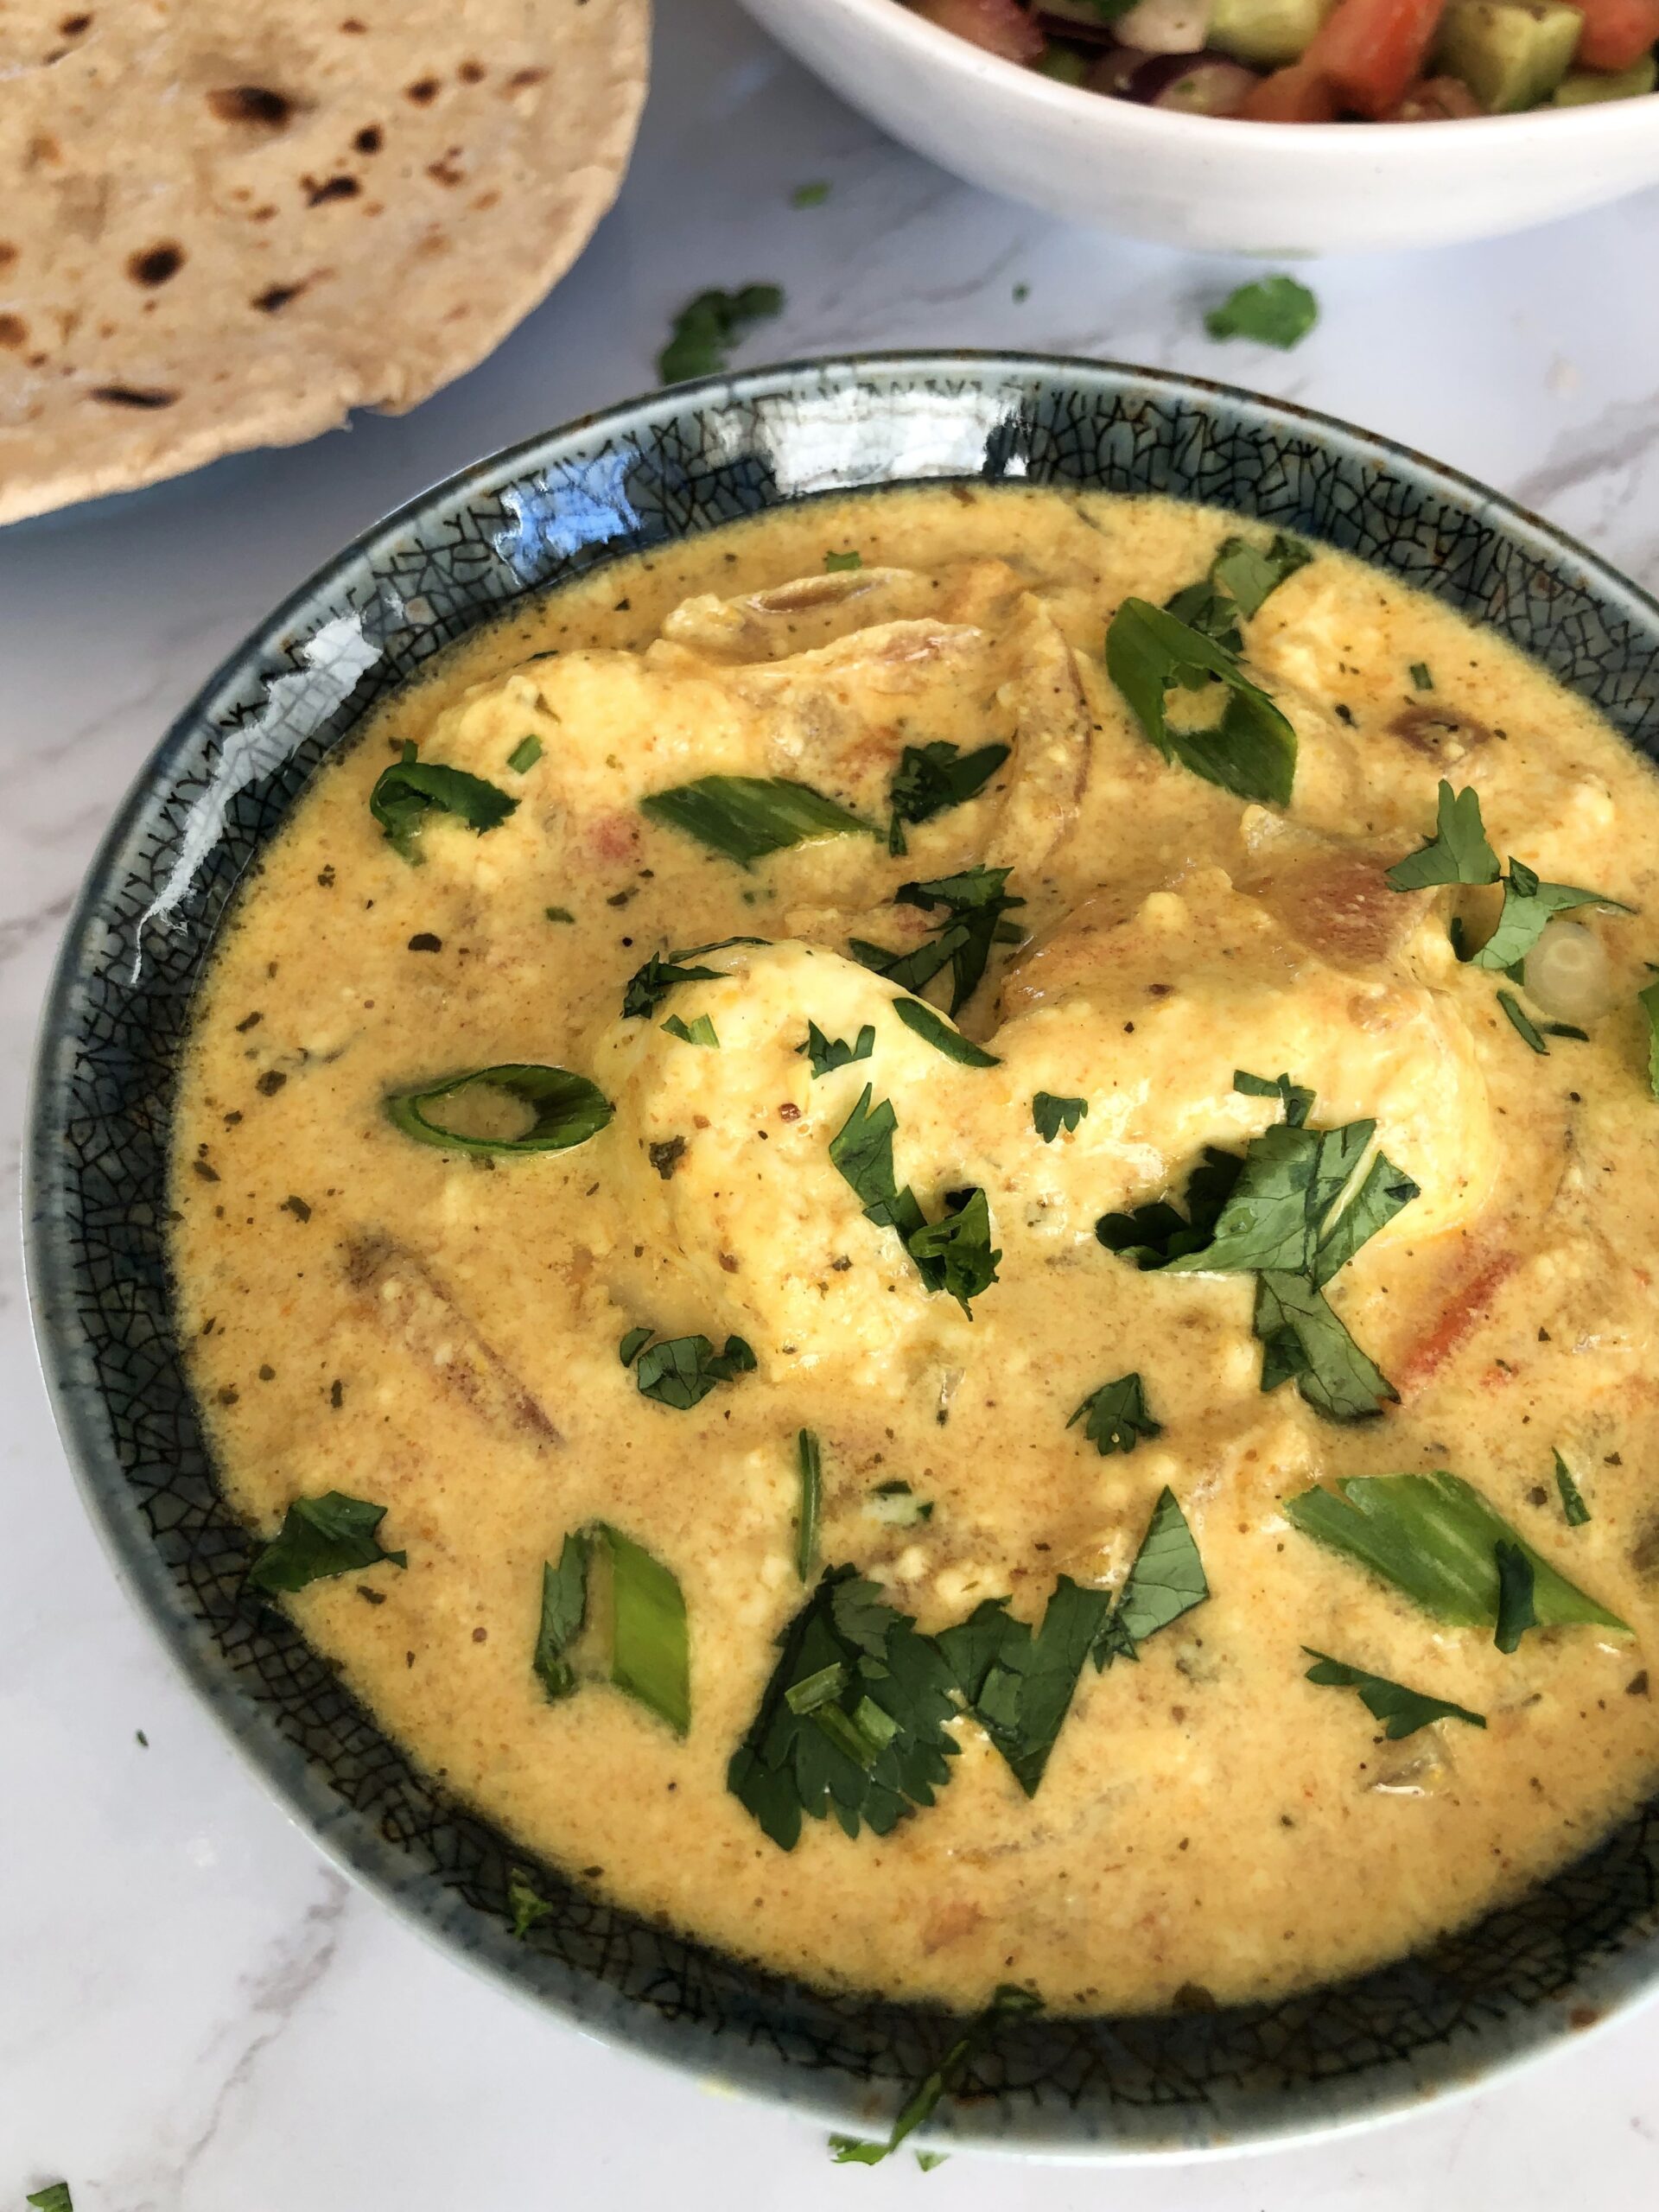 Yumm! Shahi paneer - cubed homemade paneer dunked in a luscious creamy curry sauce